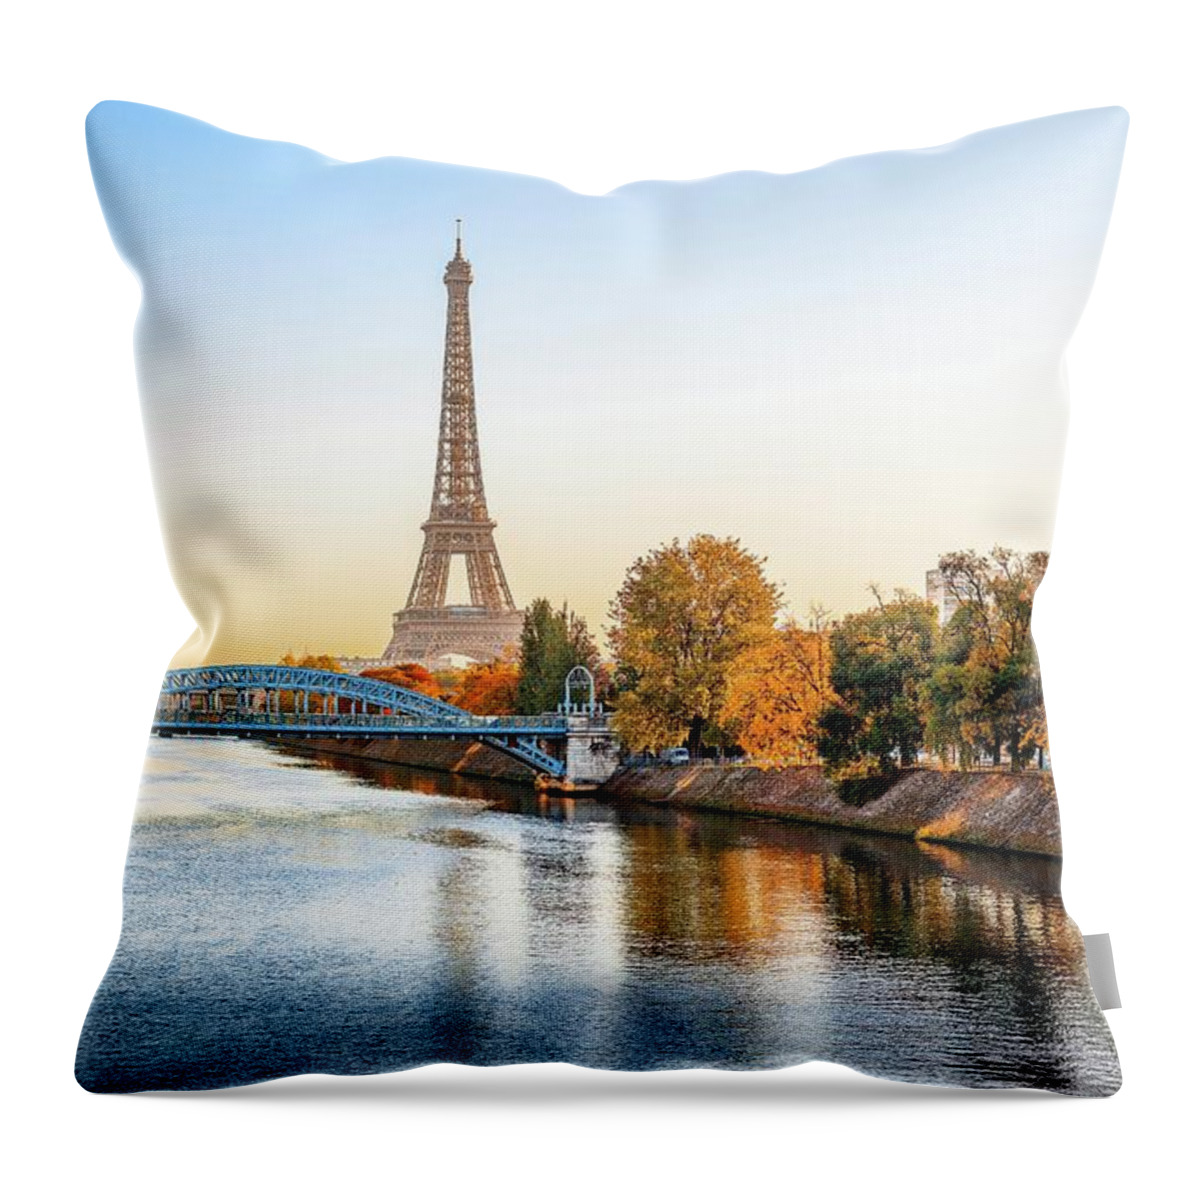 Estock Throw Pillow featuring the digital art Eiffel Tower By The River Seine by Antonino Bartuccio